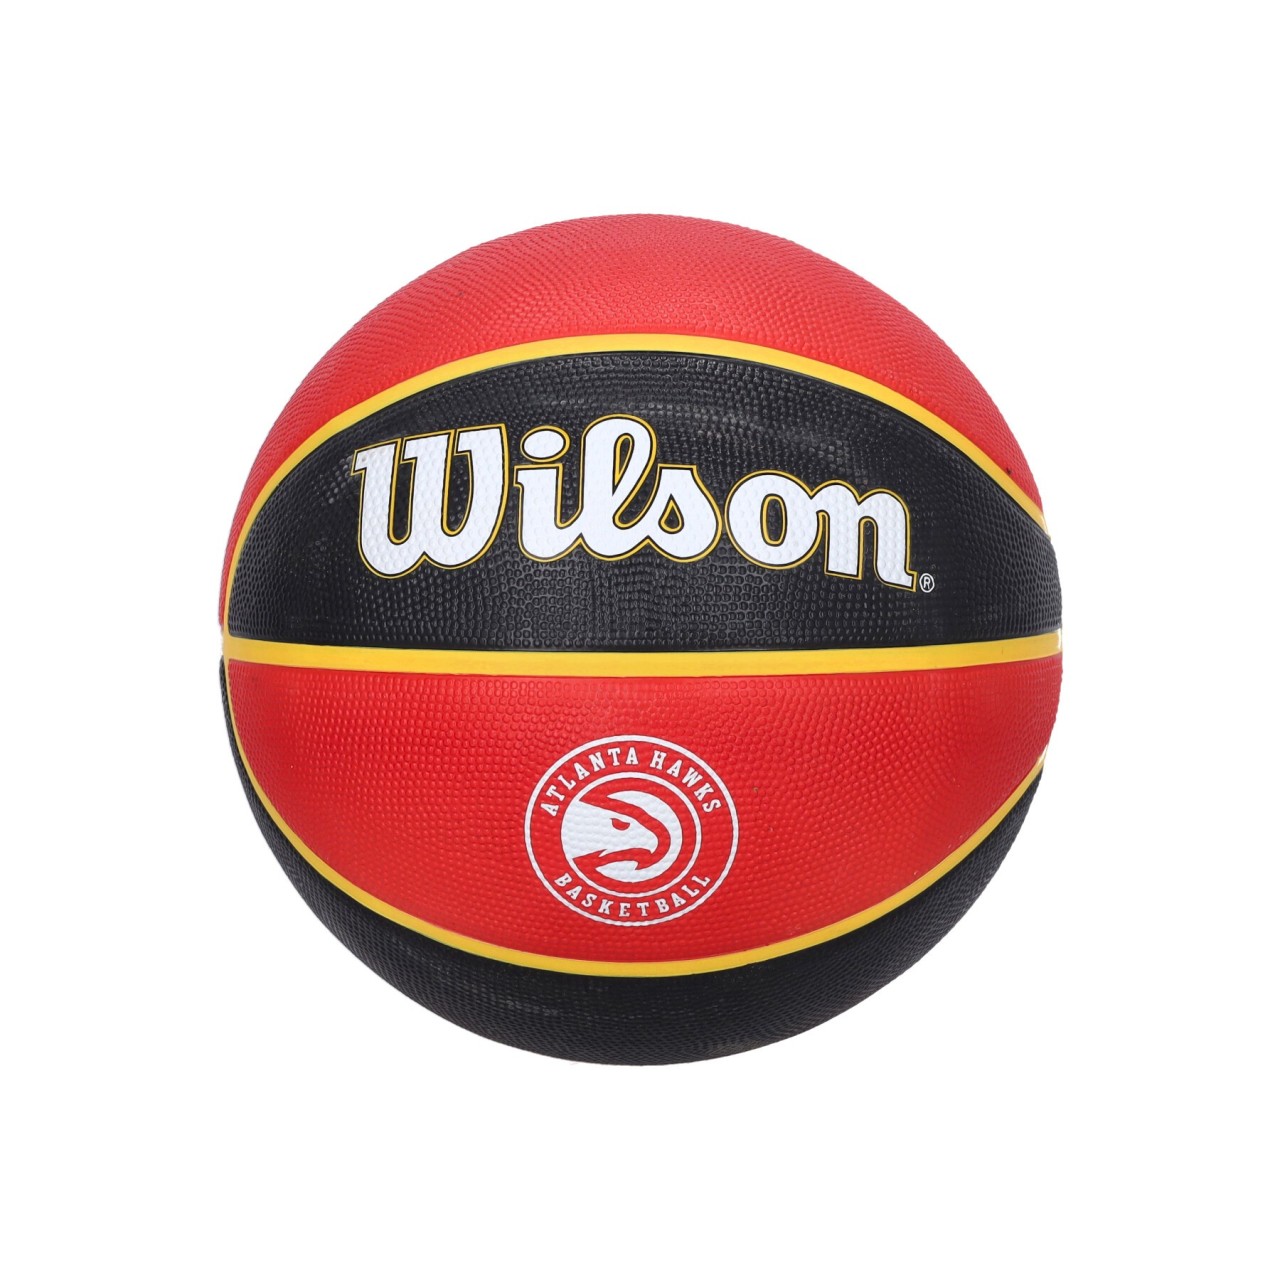 WILSON TEAM NBA TEAM TRIBUTE BASKETBALL SIZE 7 ATLHAW WTB1300XBATL